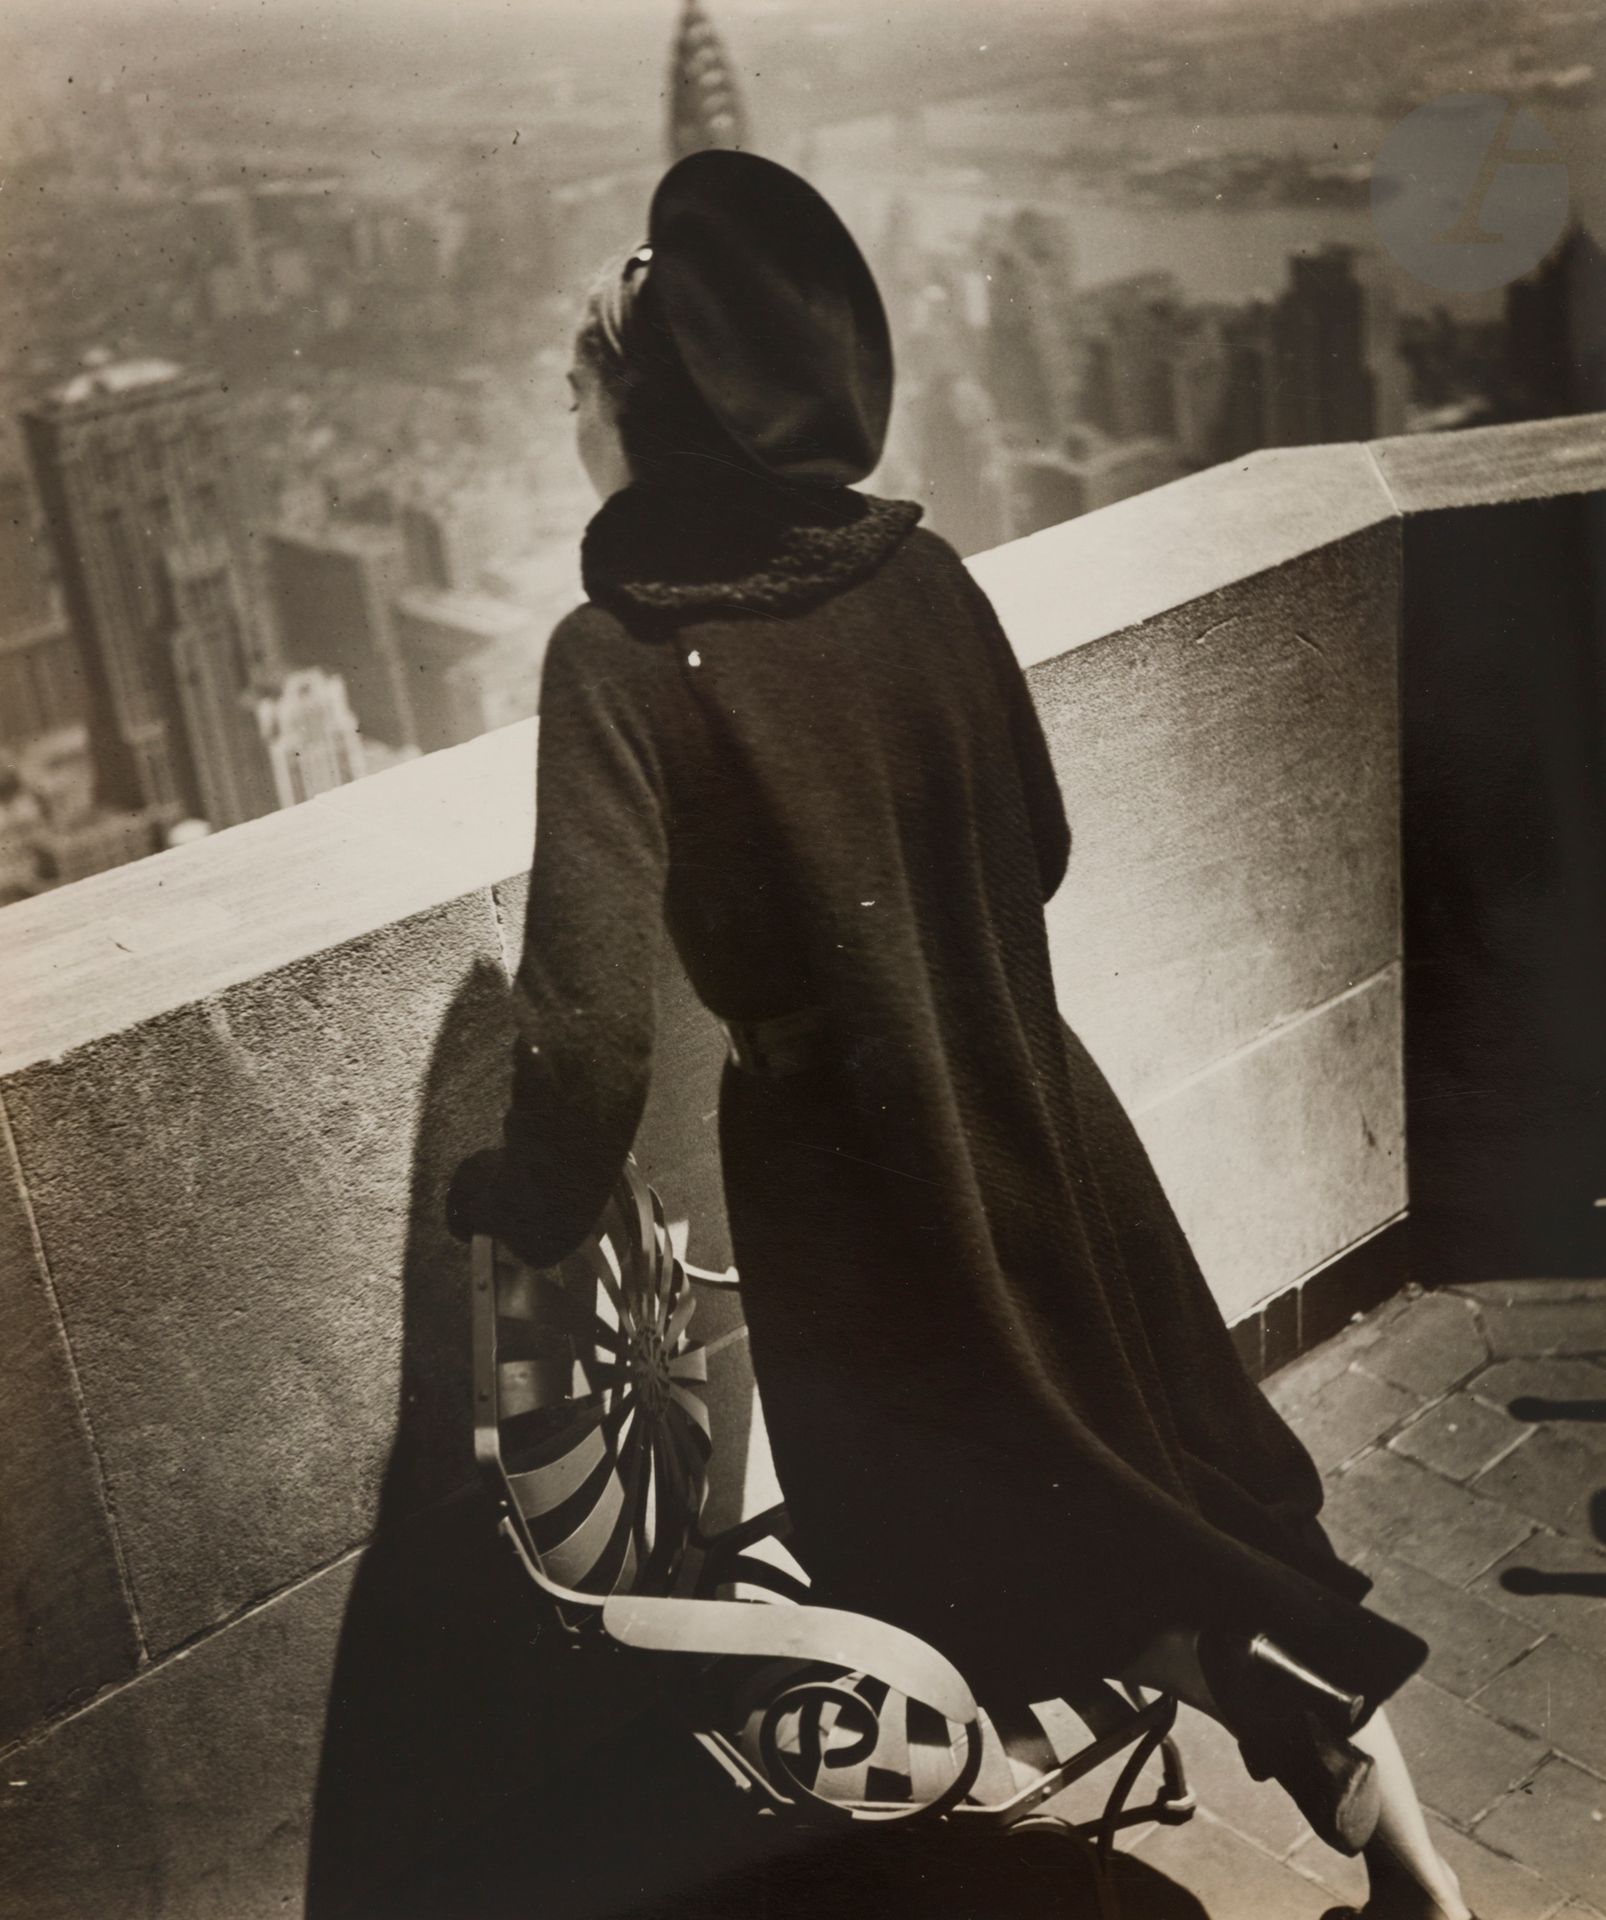 Null 让-莫拉尔(1906-1999)
帝国大厦露台上的人体模特。纽约，1935年。
银质印刷品，在背面用铅笔签名。 
28.5 x 24厘米

出处： 
&hellip;